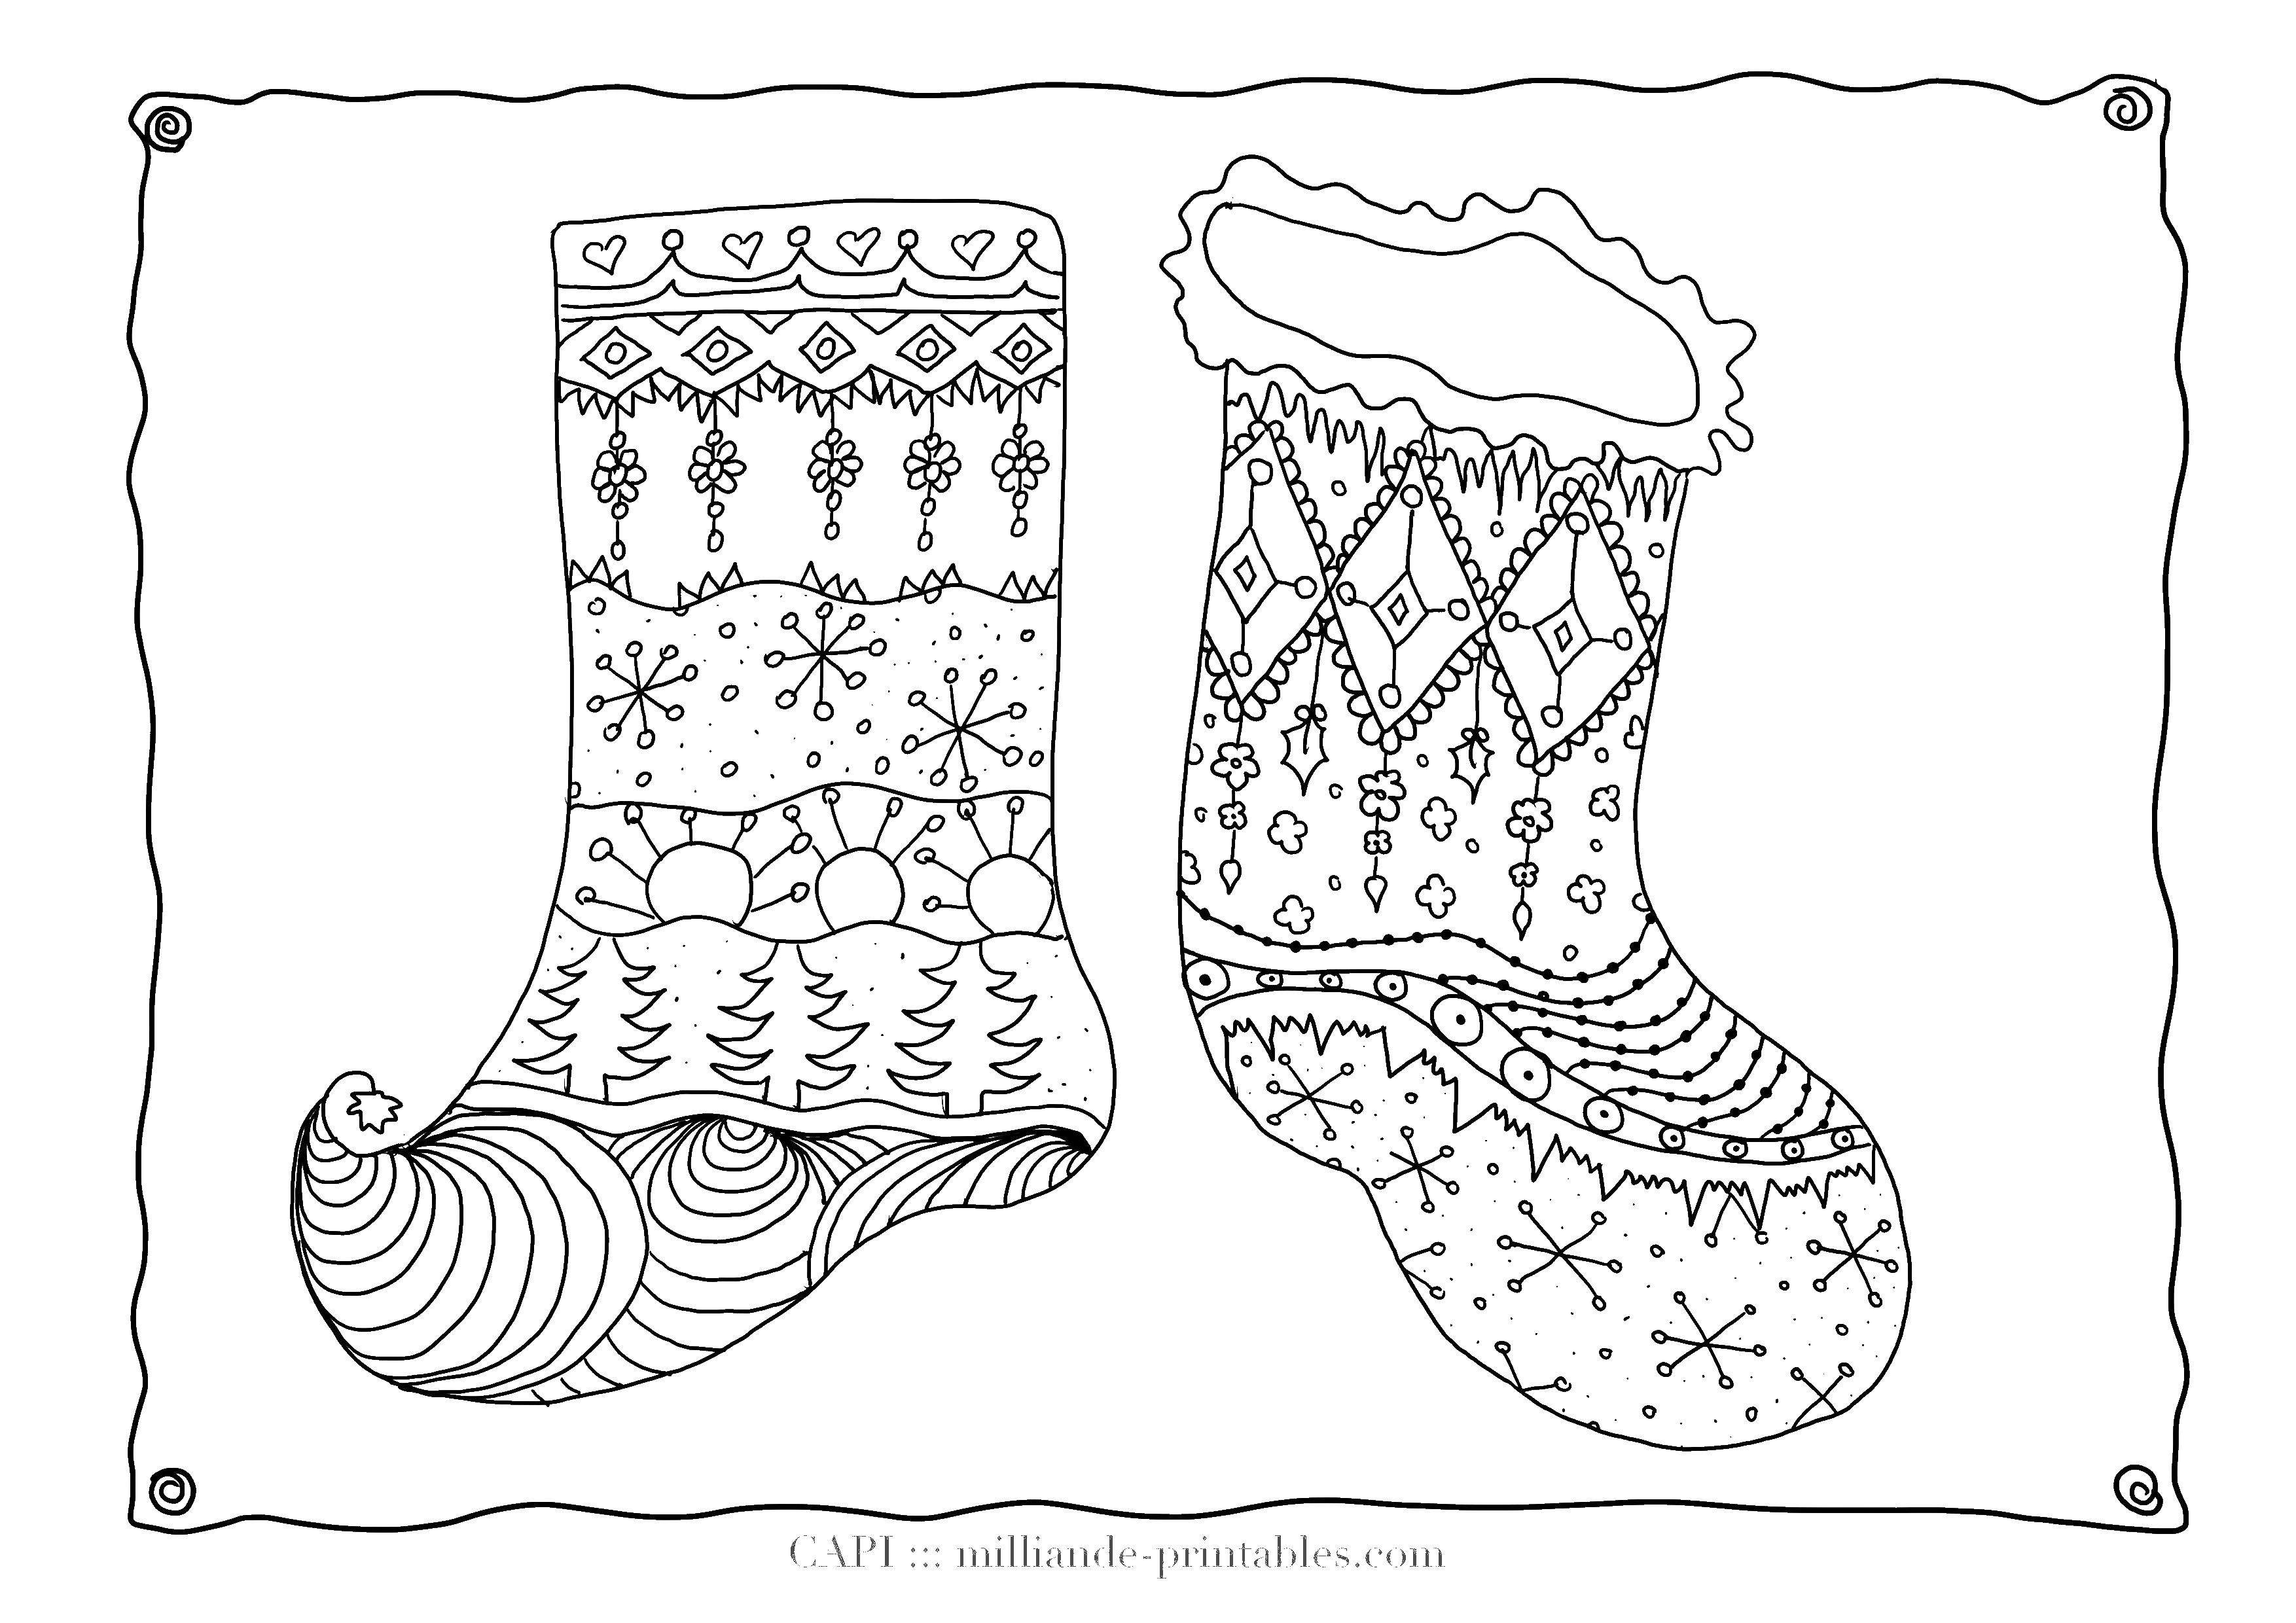 Coloring Socks. Category Clothing. Tags:  clothing, socks.